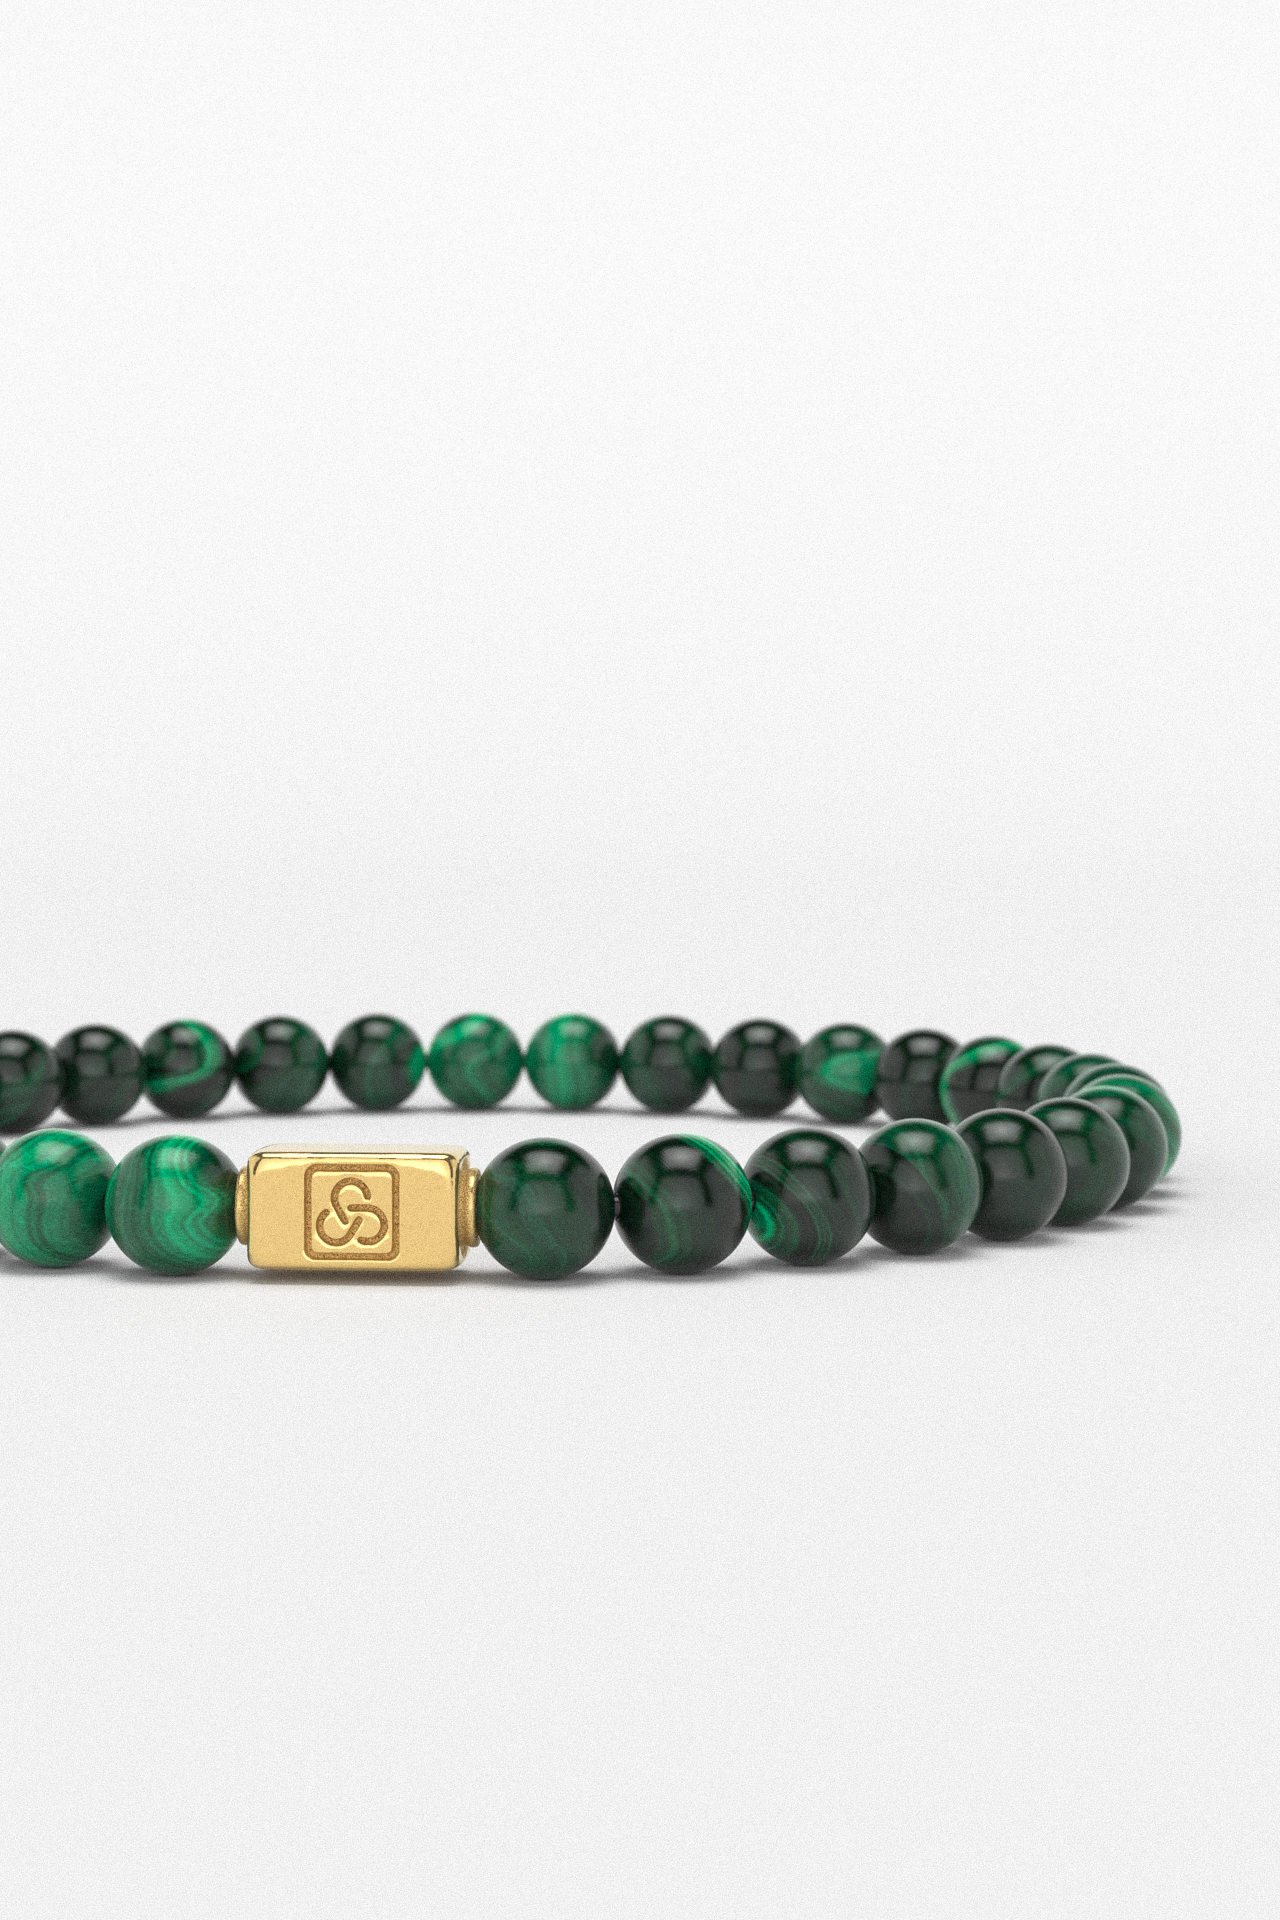 Green Malachite Bracelet 6mm | Essential